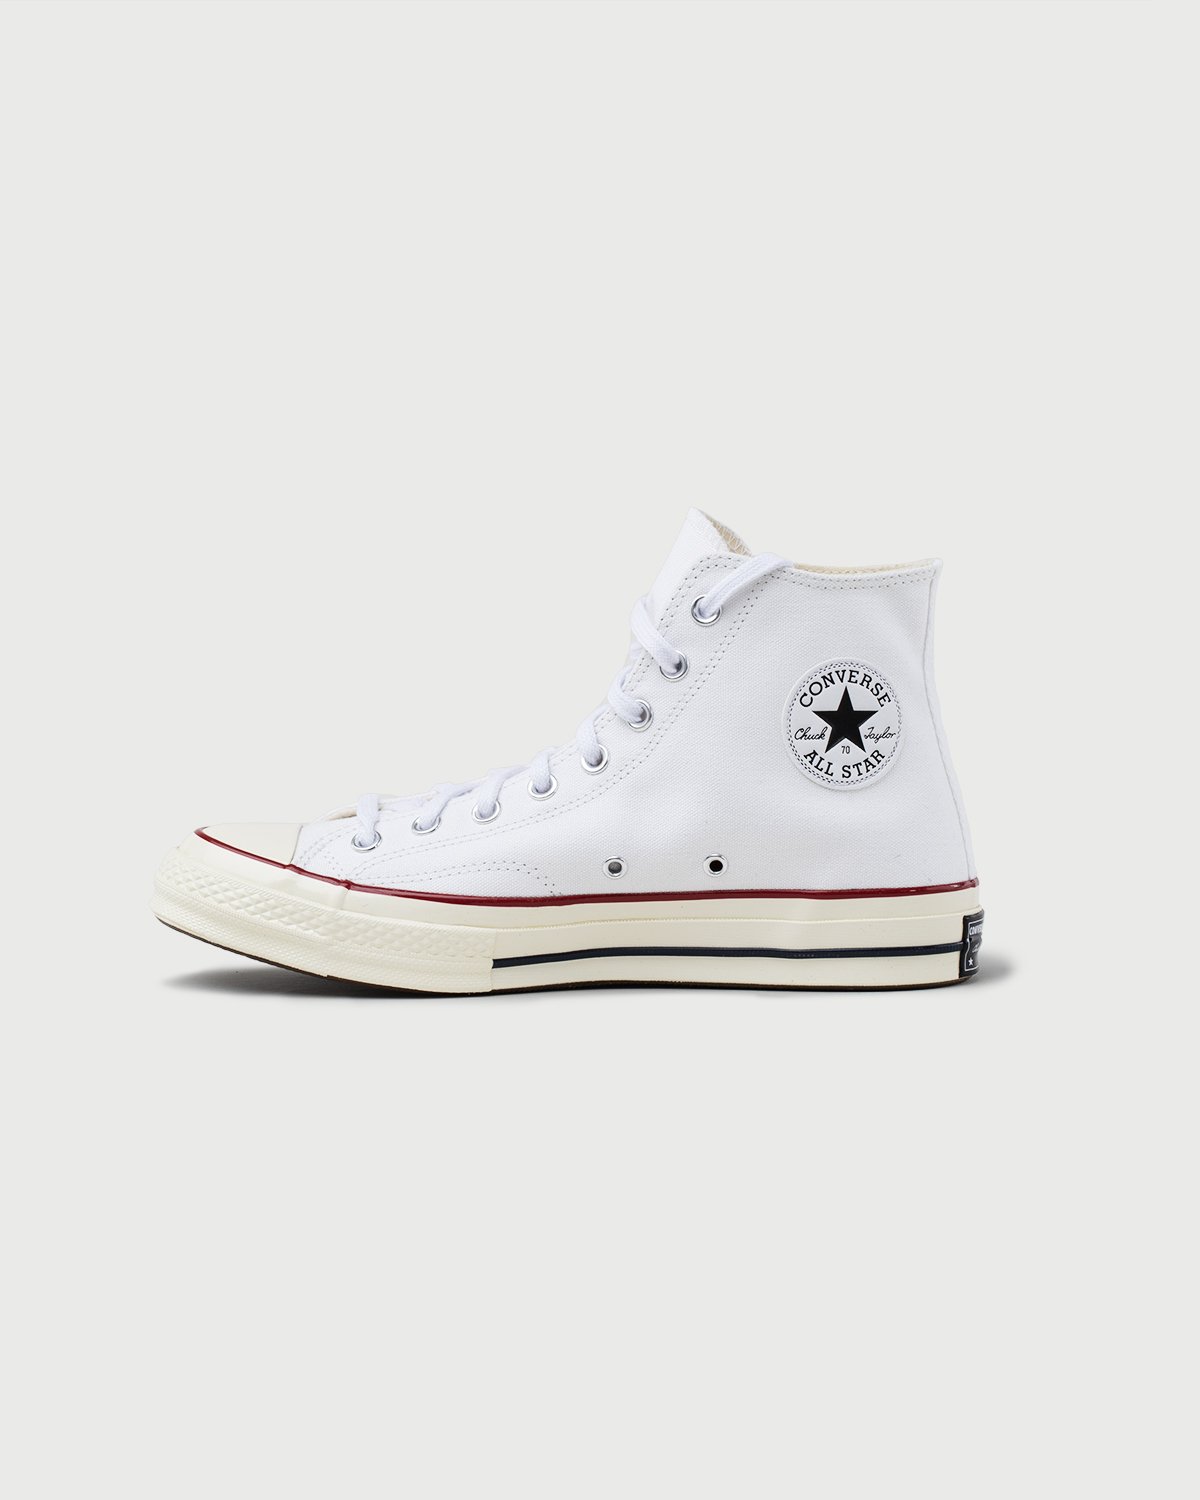 Converse - Chuck 70 Hi White - Footwear - White - Image 5